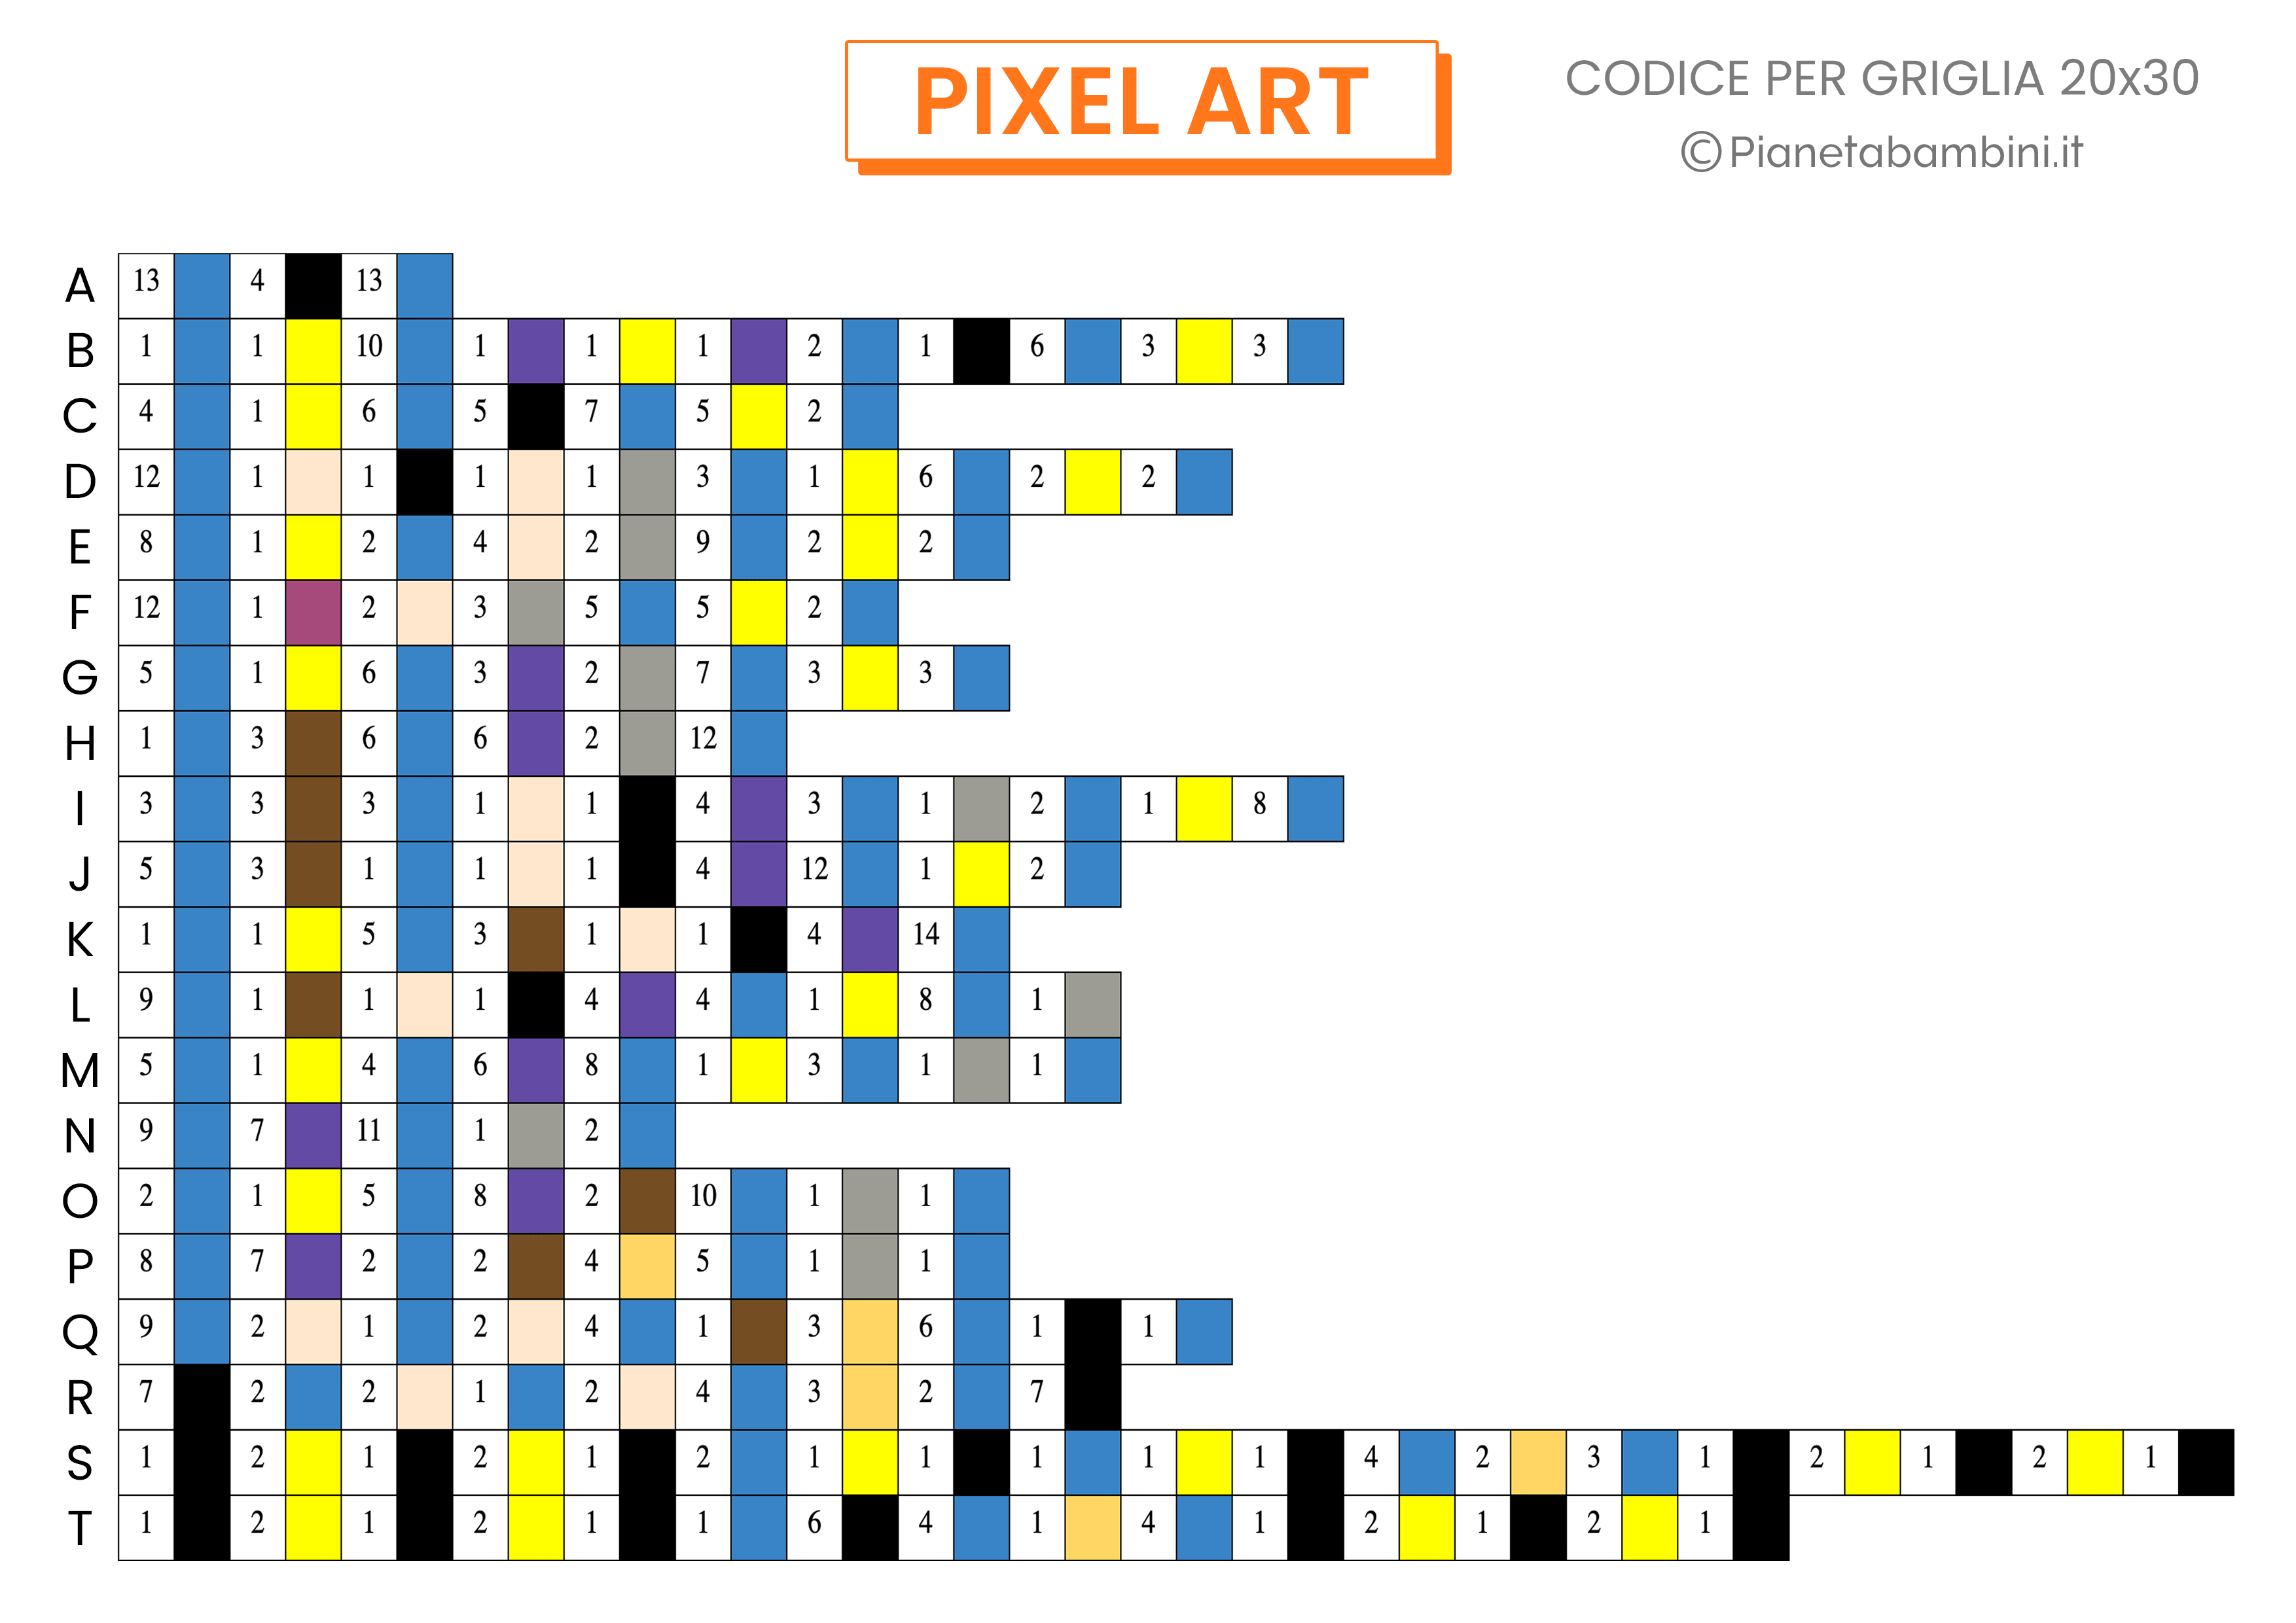 Pixel Art Befana Codice Difficile da stampare